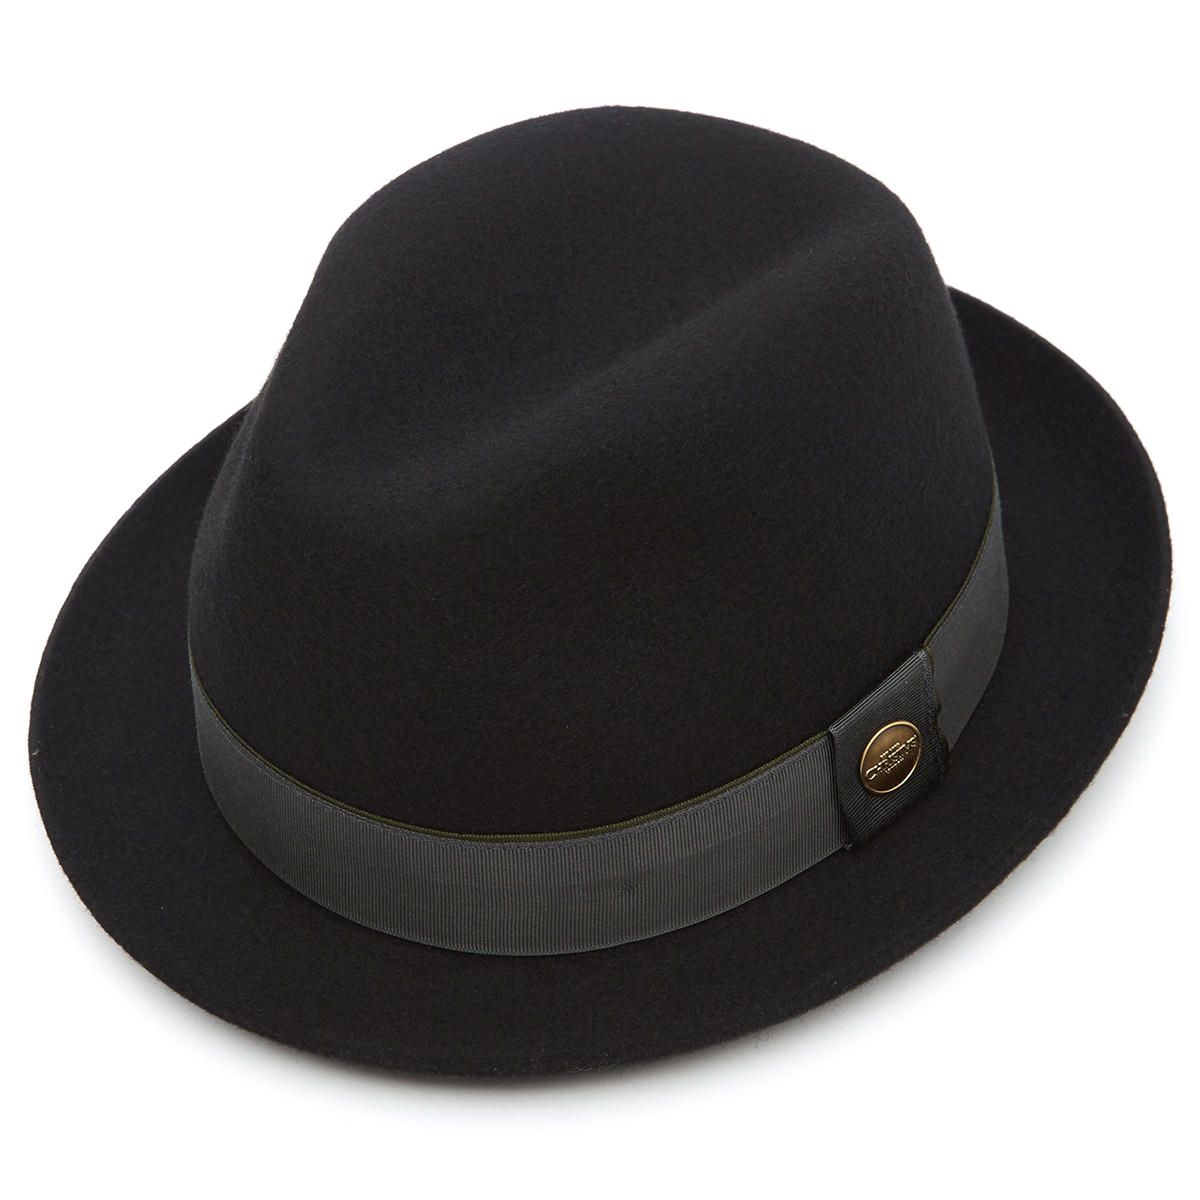 Winchester Wool Felt Trilby Hat